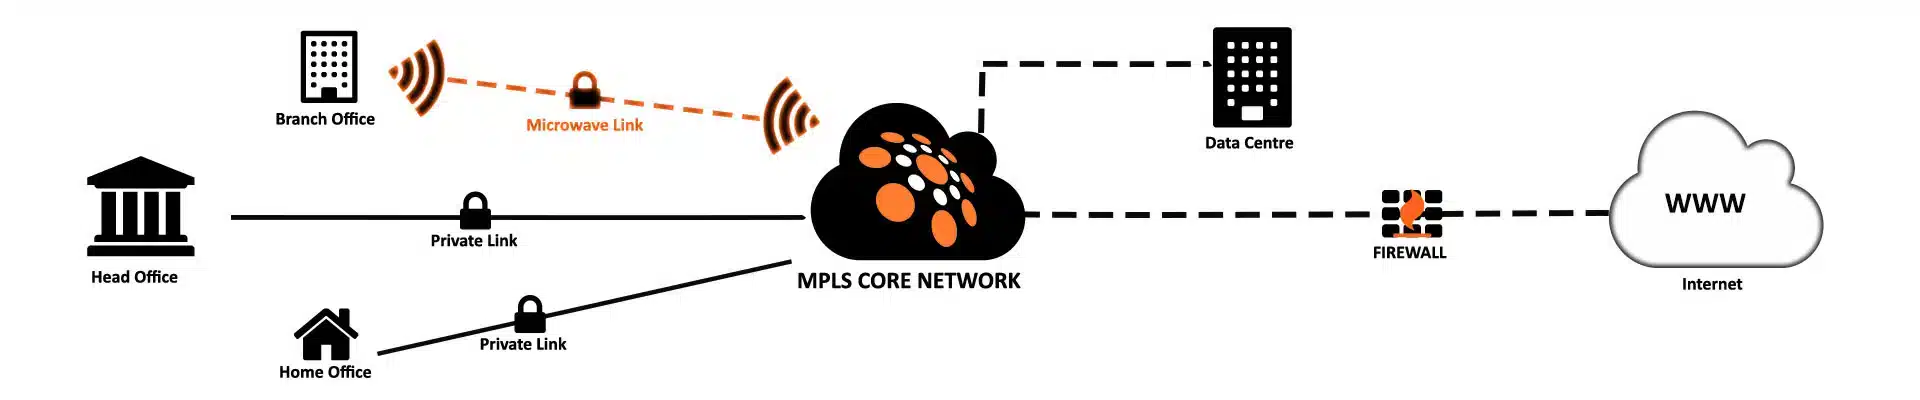 mpls core network